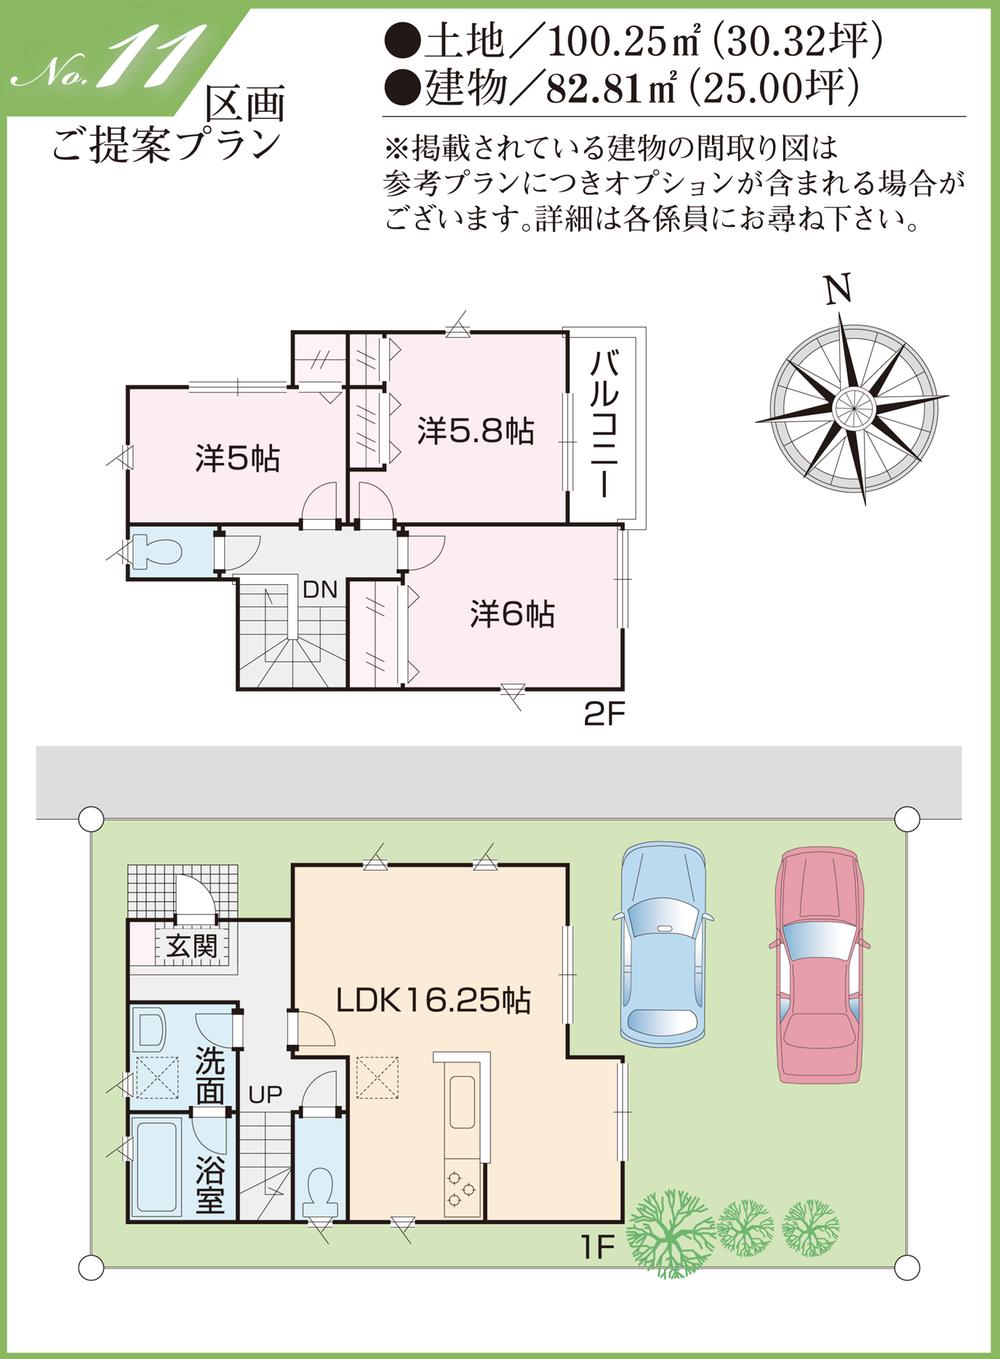 Compartment view + building plan example. Building plan example (No.11) 3LDK, Land price 18 million yen, Land area 100.25 sq m , Building price 10.8 million yen, Building area 82.81 sq m